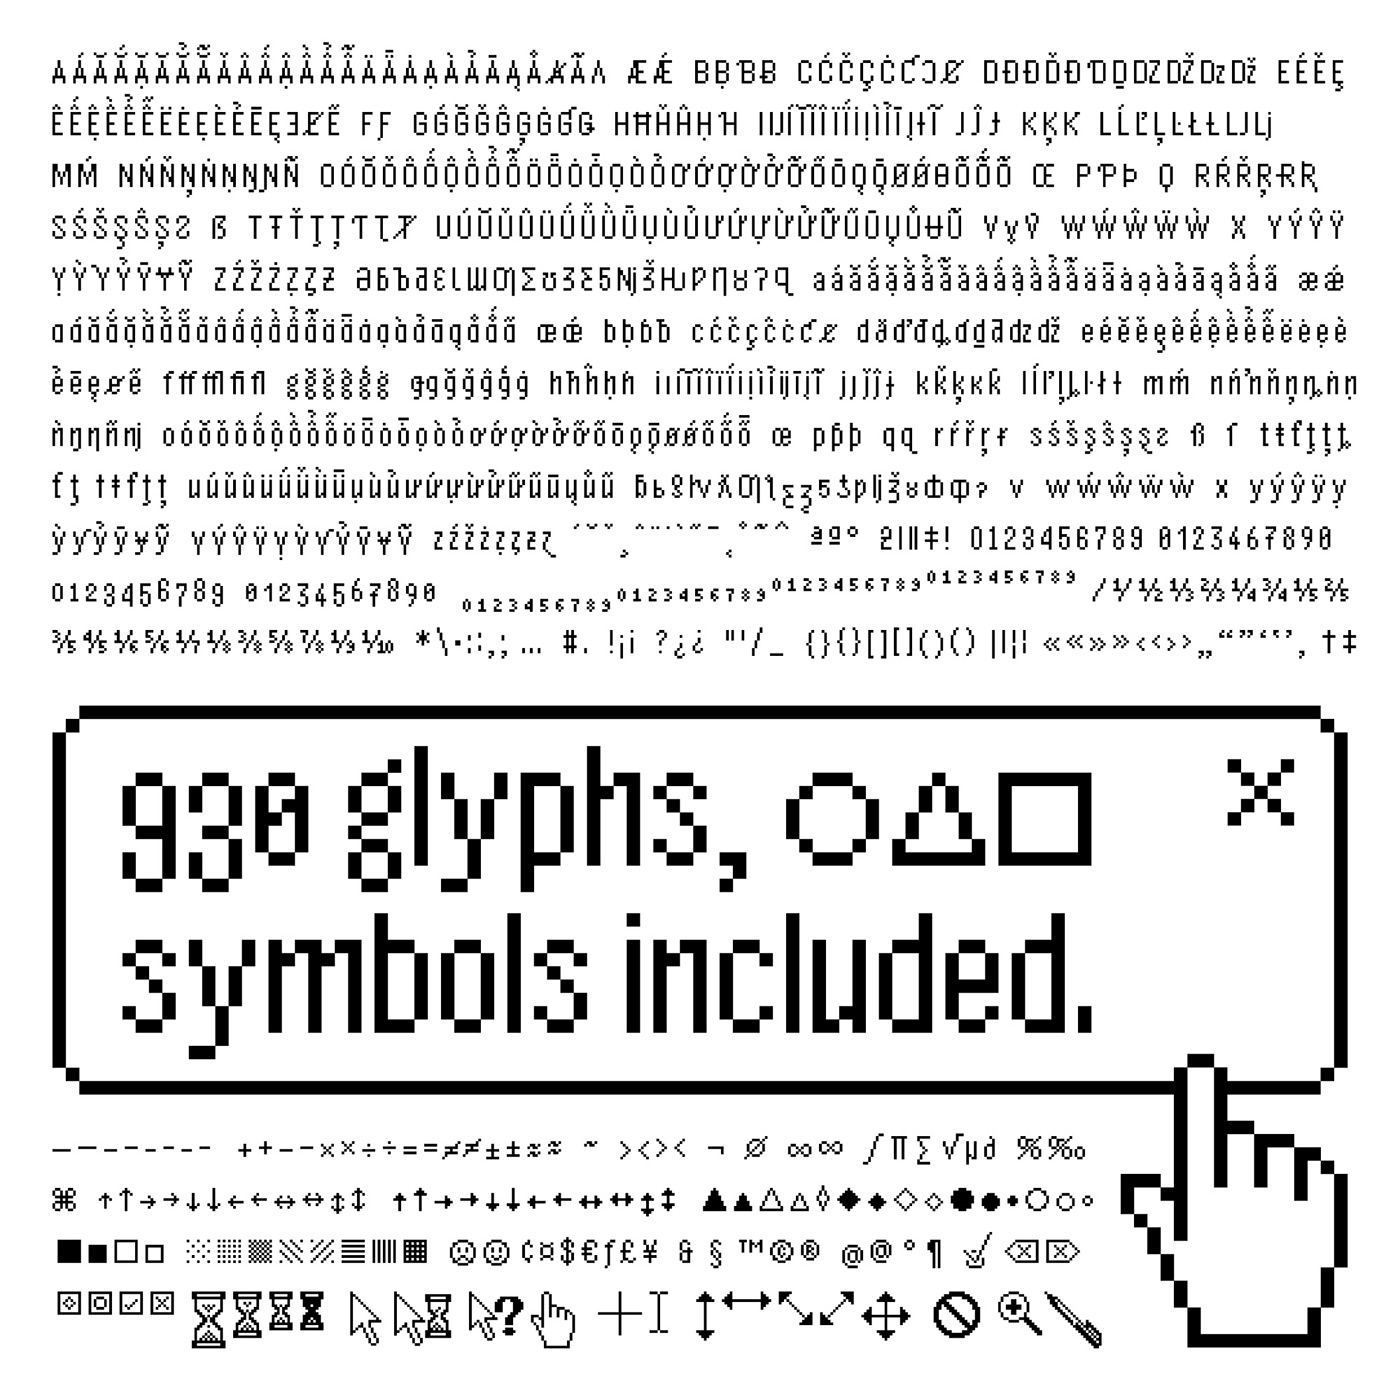 bitmap pixel Flash font Typeface typo black and white minimal simple swiss modular grid based digital micro